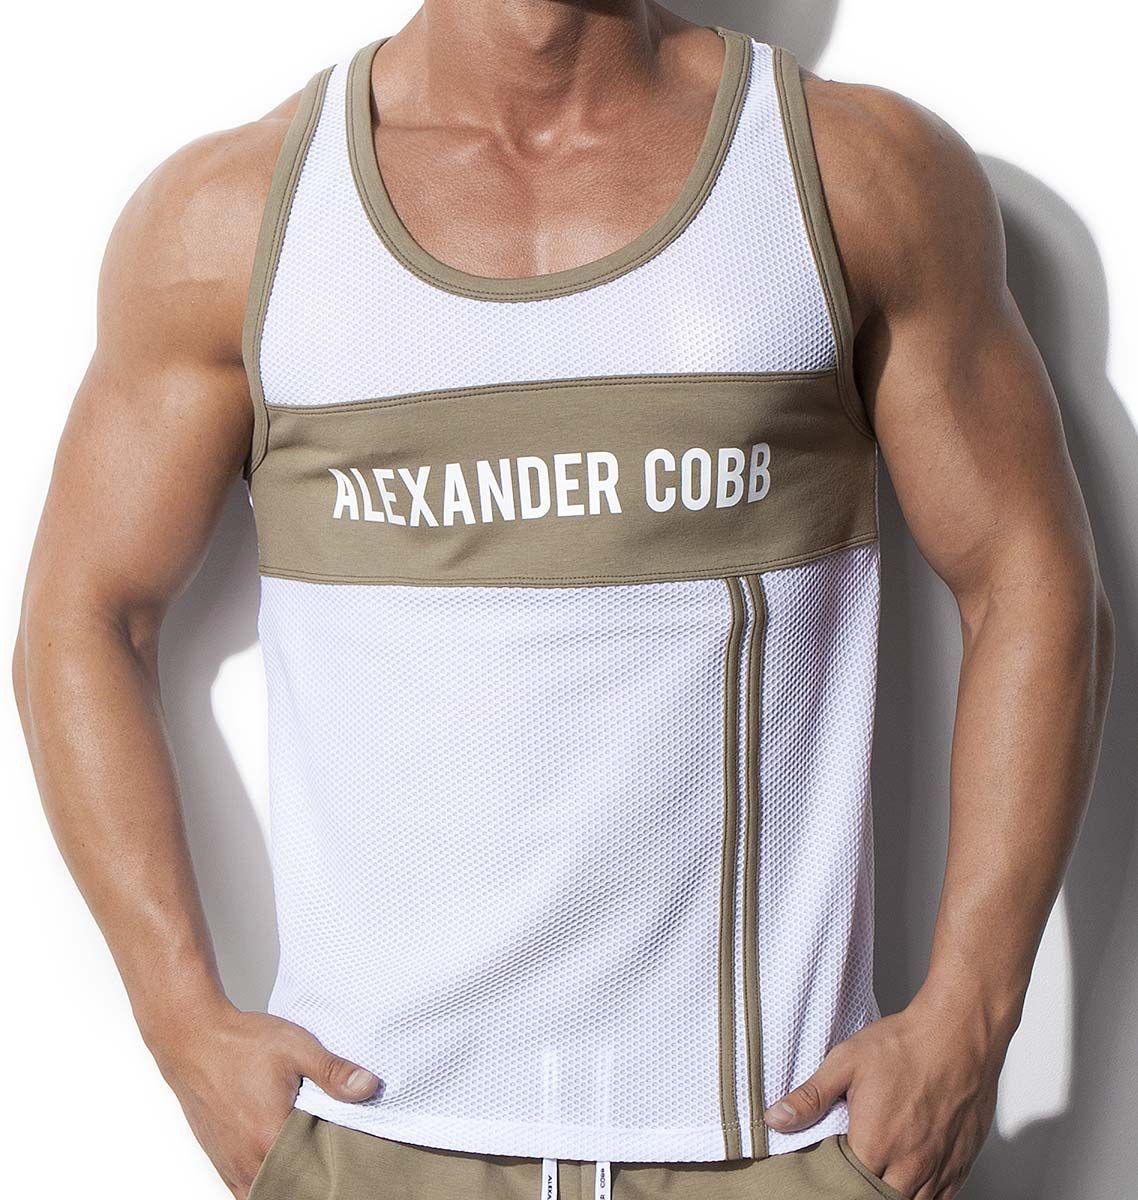 Alexander COBB Tank Top Athletic Wear TANK TOP ARMY, green